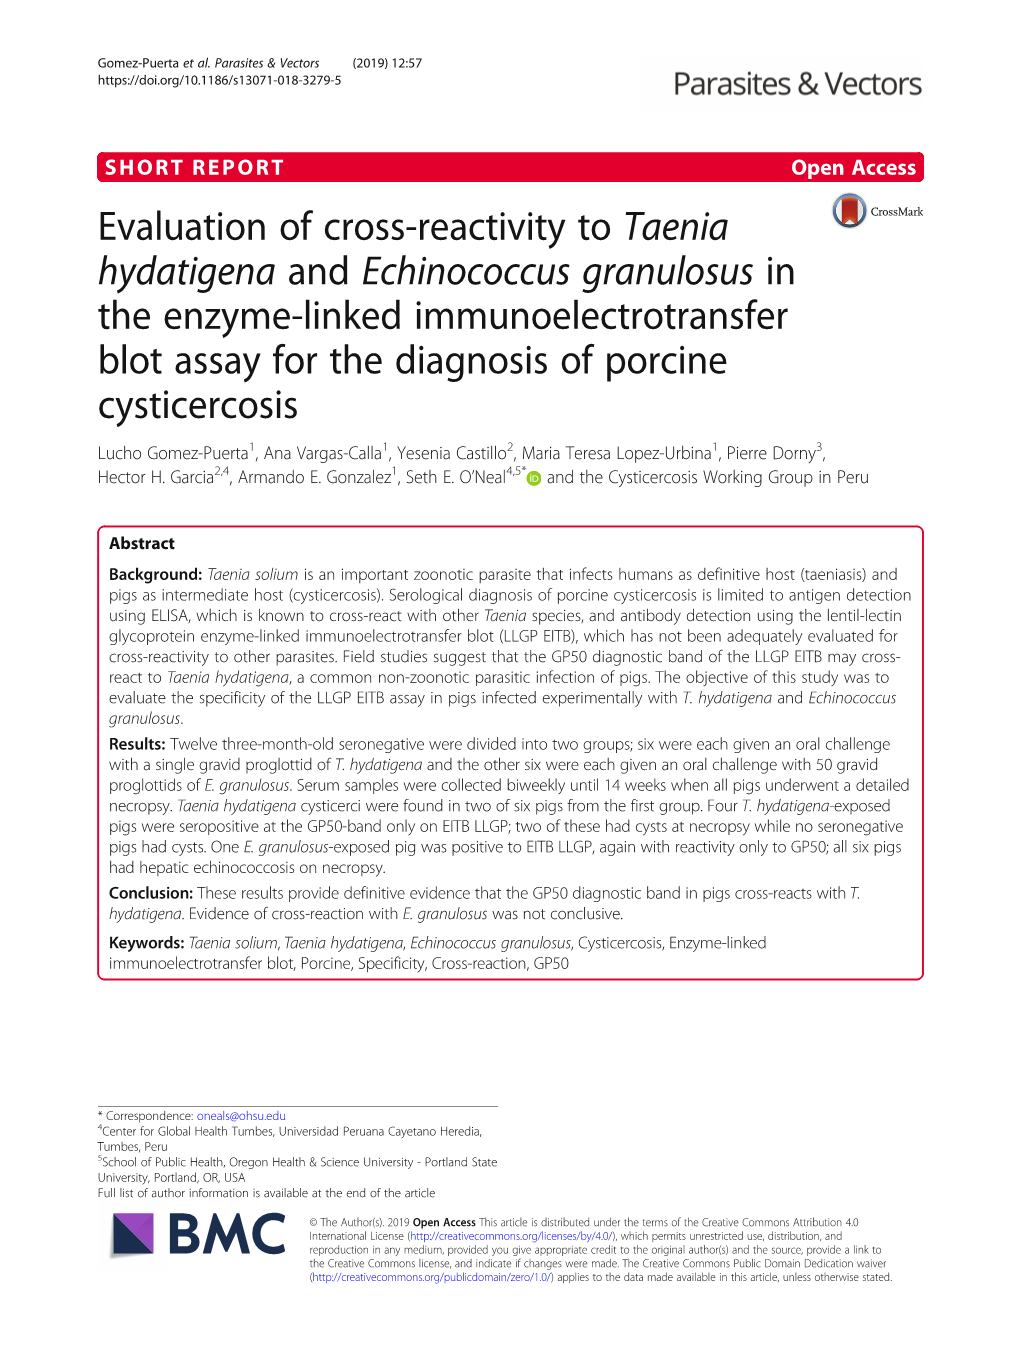 Evaluation of Cross-Reactivity to Taenia Hydatigena and Echinococcus